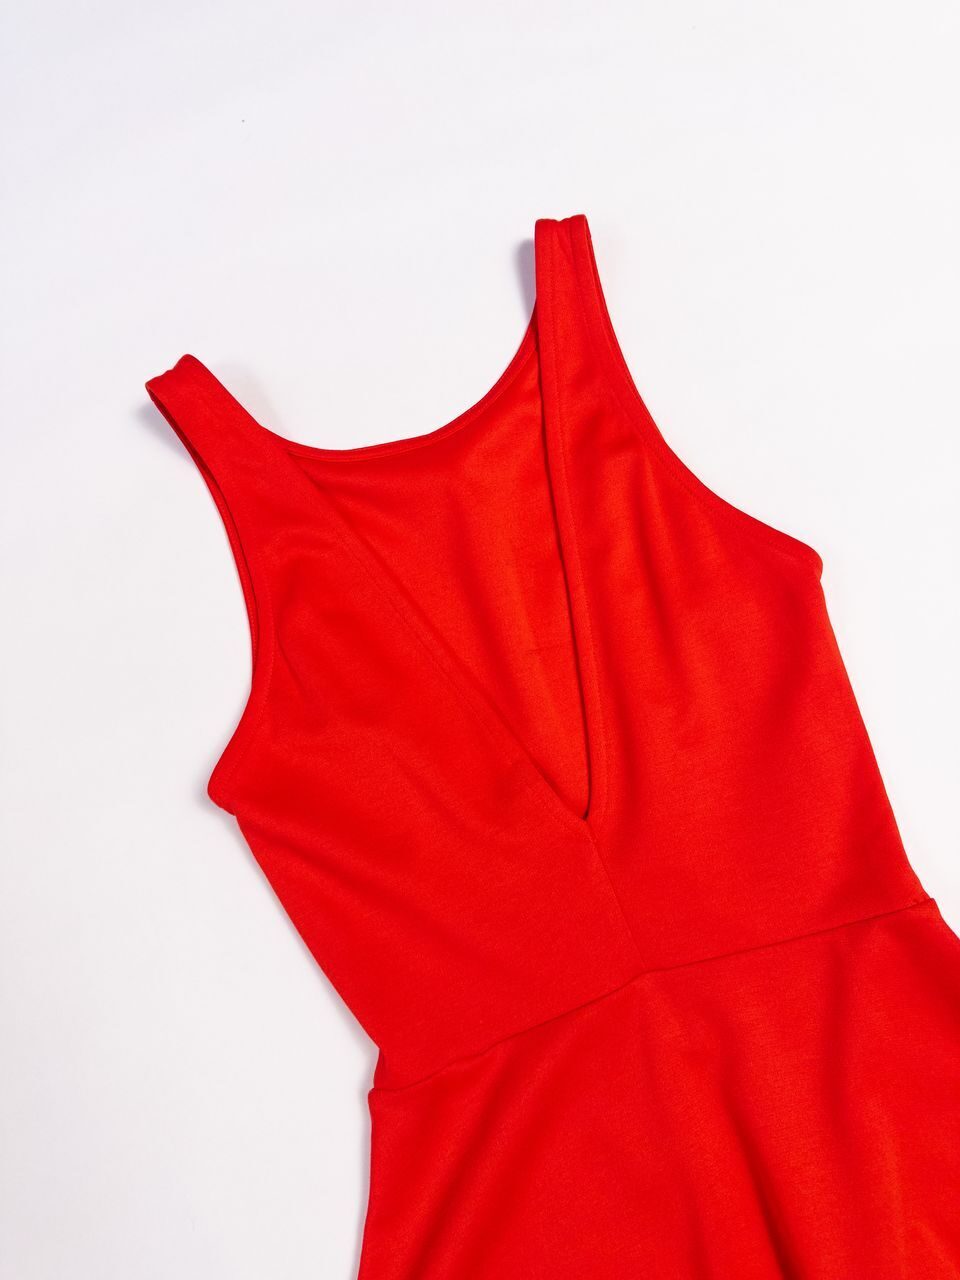 Короткое платье без рукавов из трикотажа цвет красный размер EUR 32 (rus 38) H&M